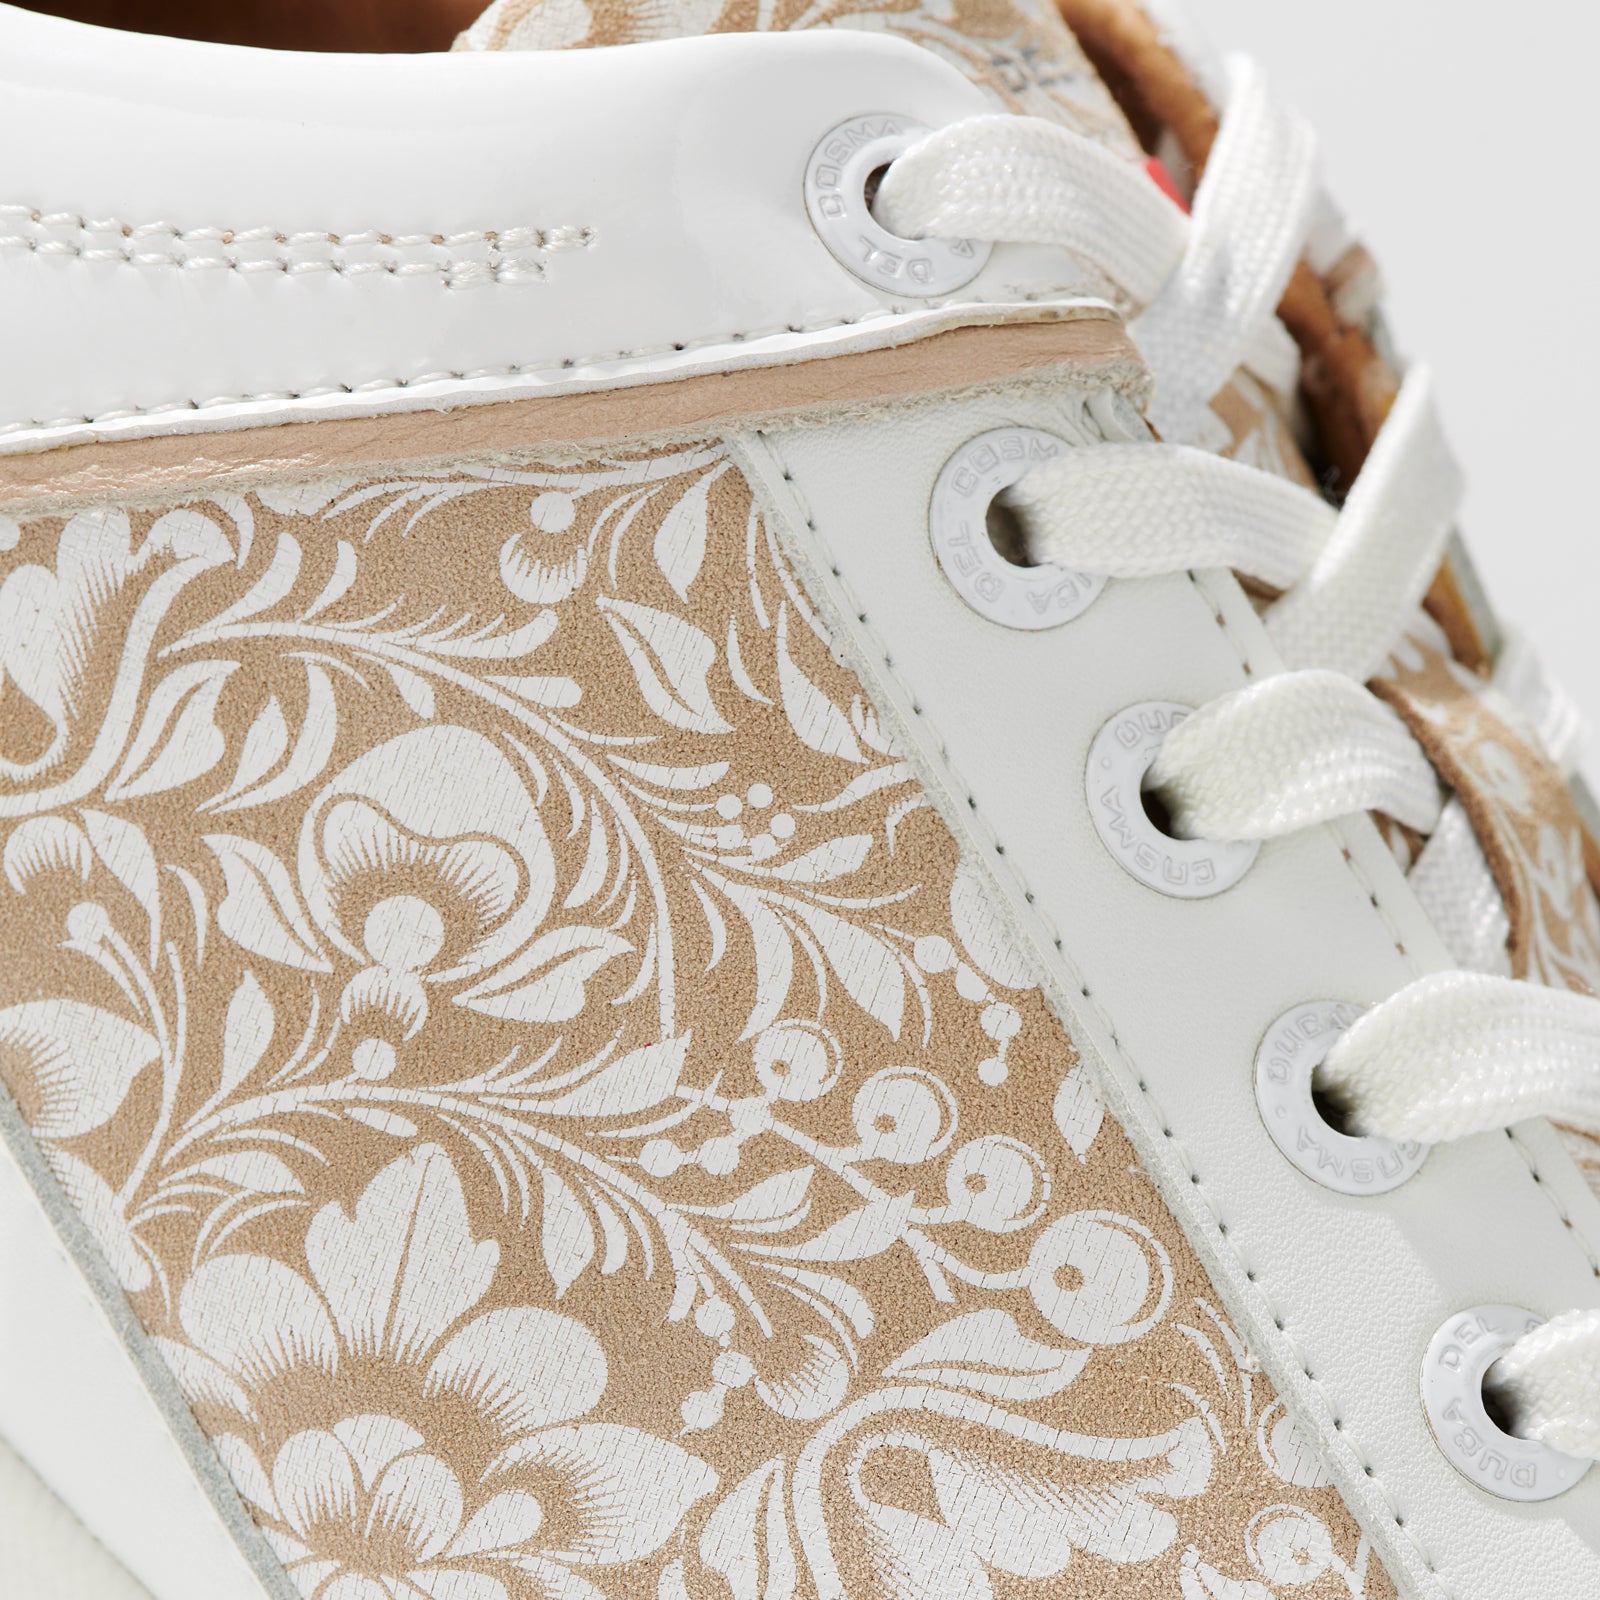 Caldes - White/Flower Women's Golf Shoes